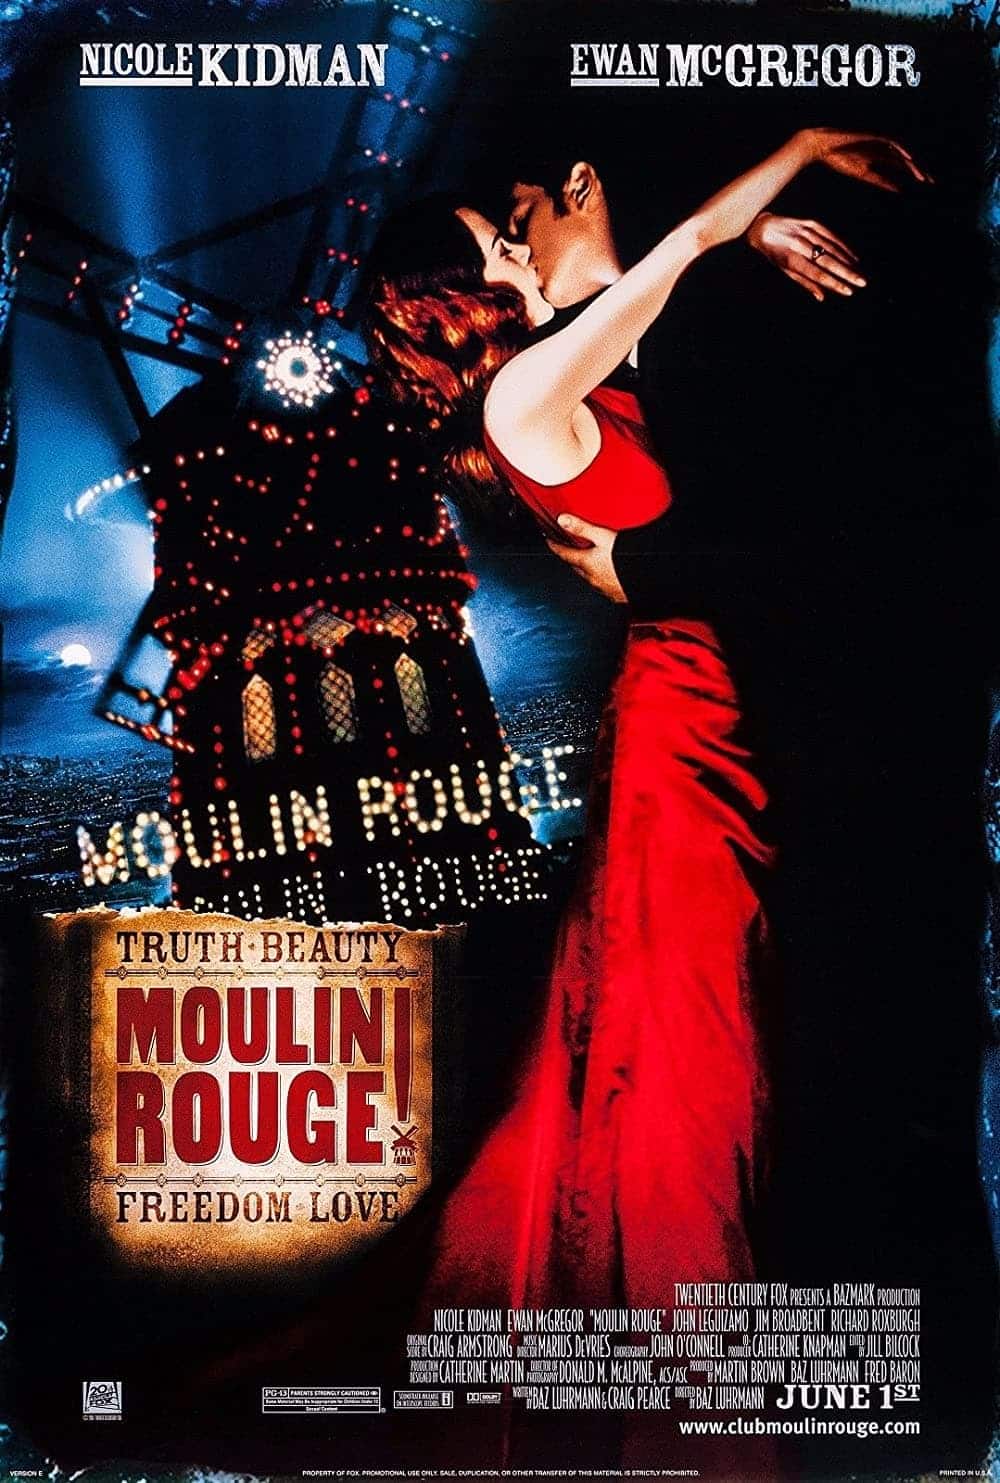 Moulin Rouge! (2001) Best Nicole Kidman Movies (Ranked)